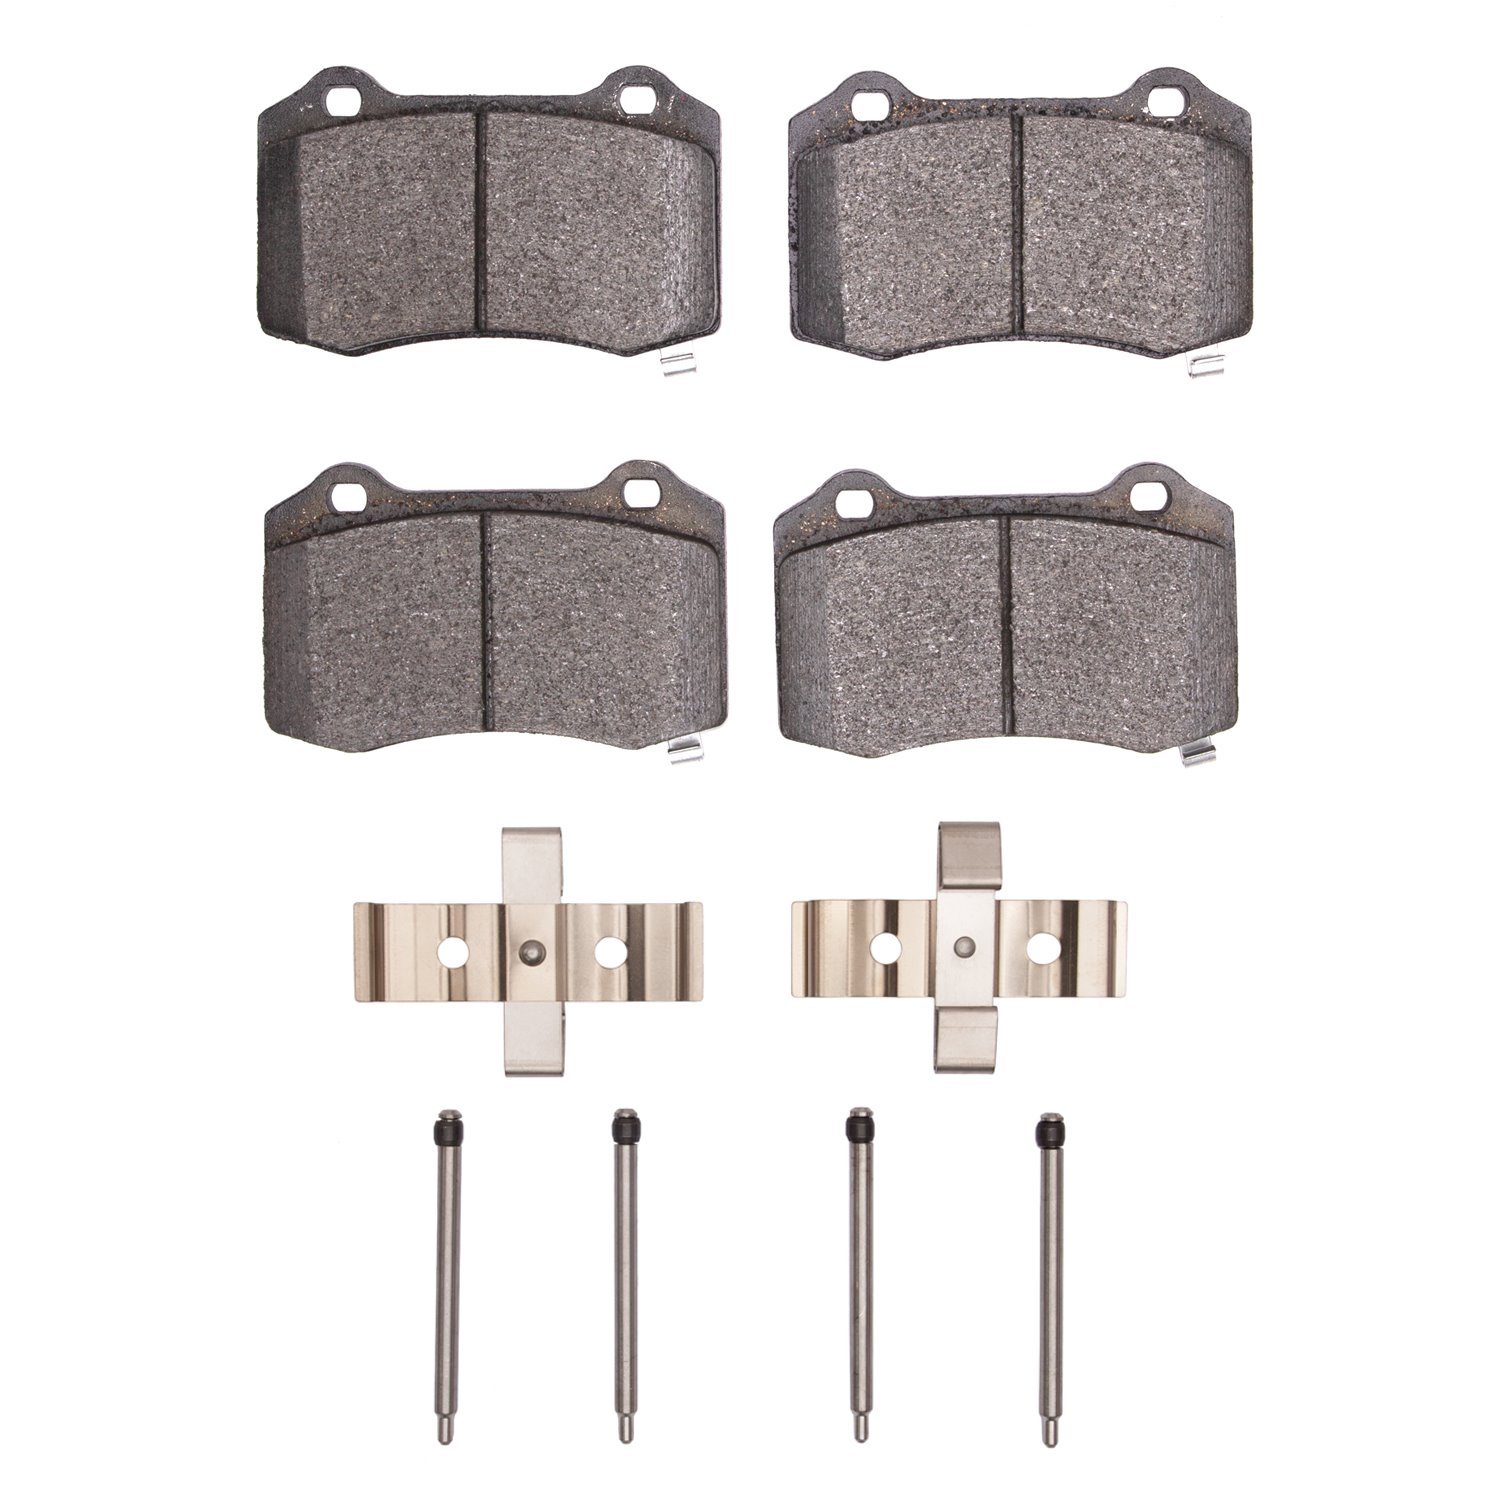 1551-1053-01 5000 Advanced Low-Metallic Brake Pads & Hardware Kit, Fits Select Multiple Makes/Models, Position: Rear